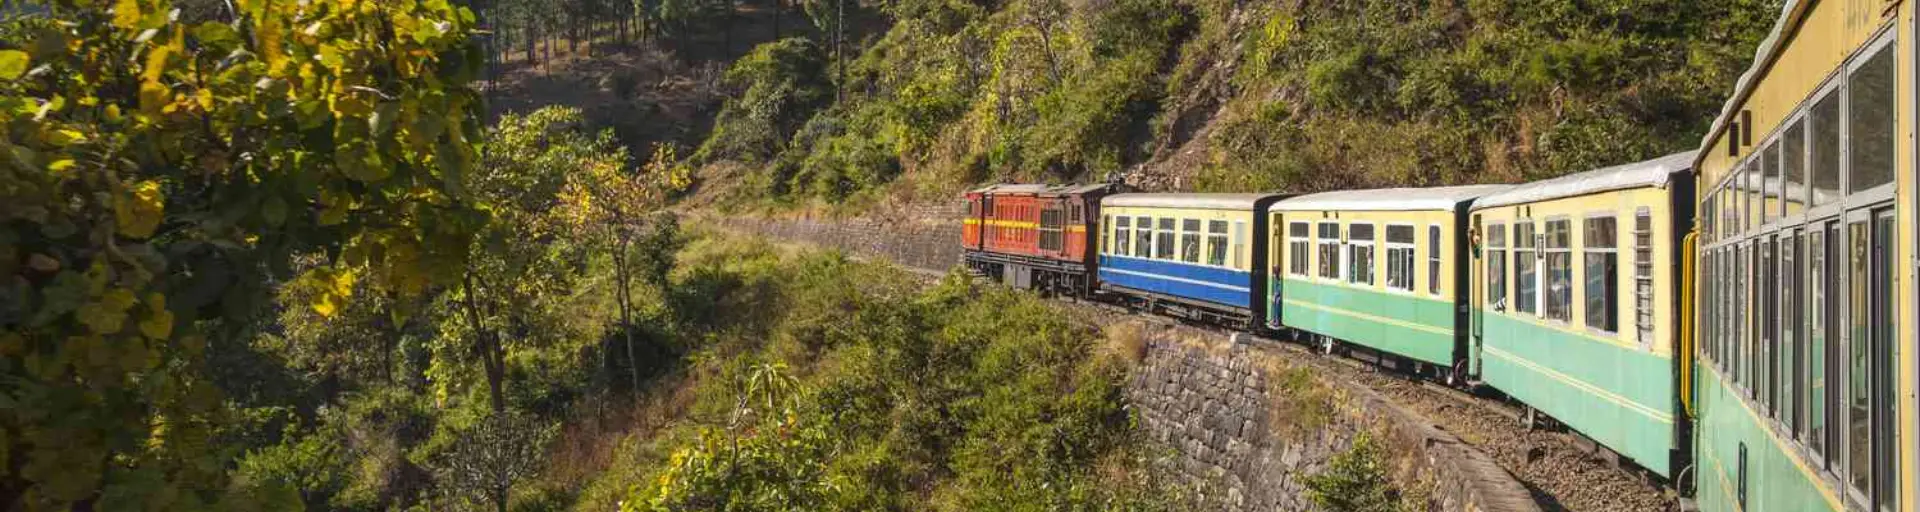 Kalka Shimla Toy Train Featured Image